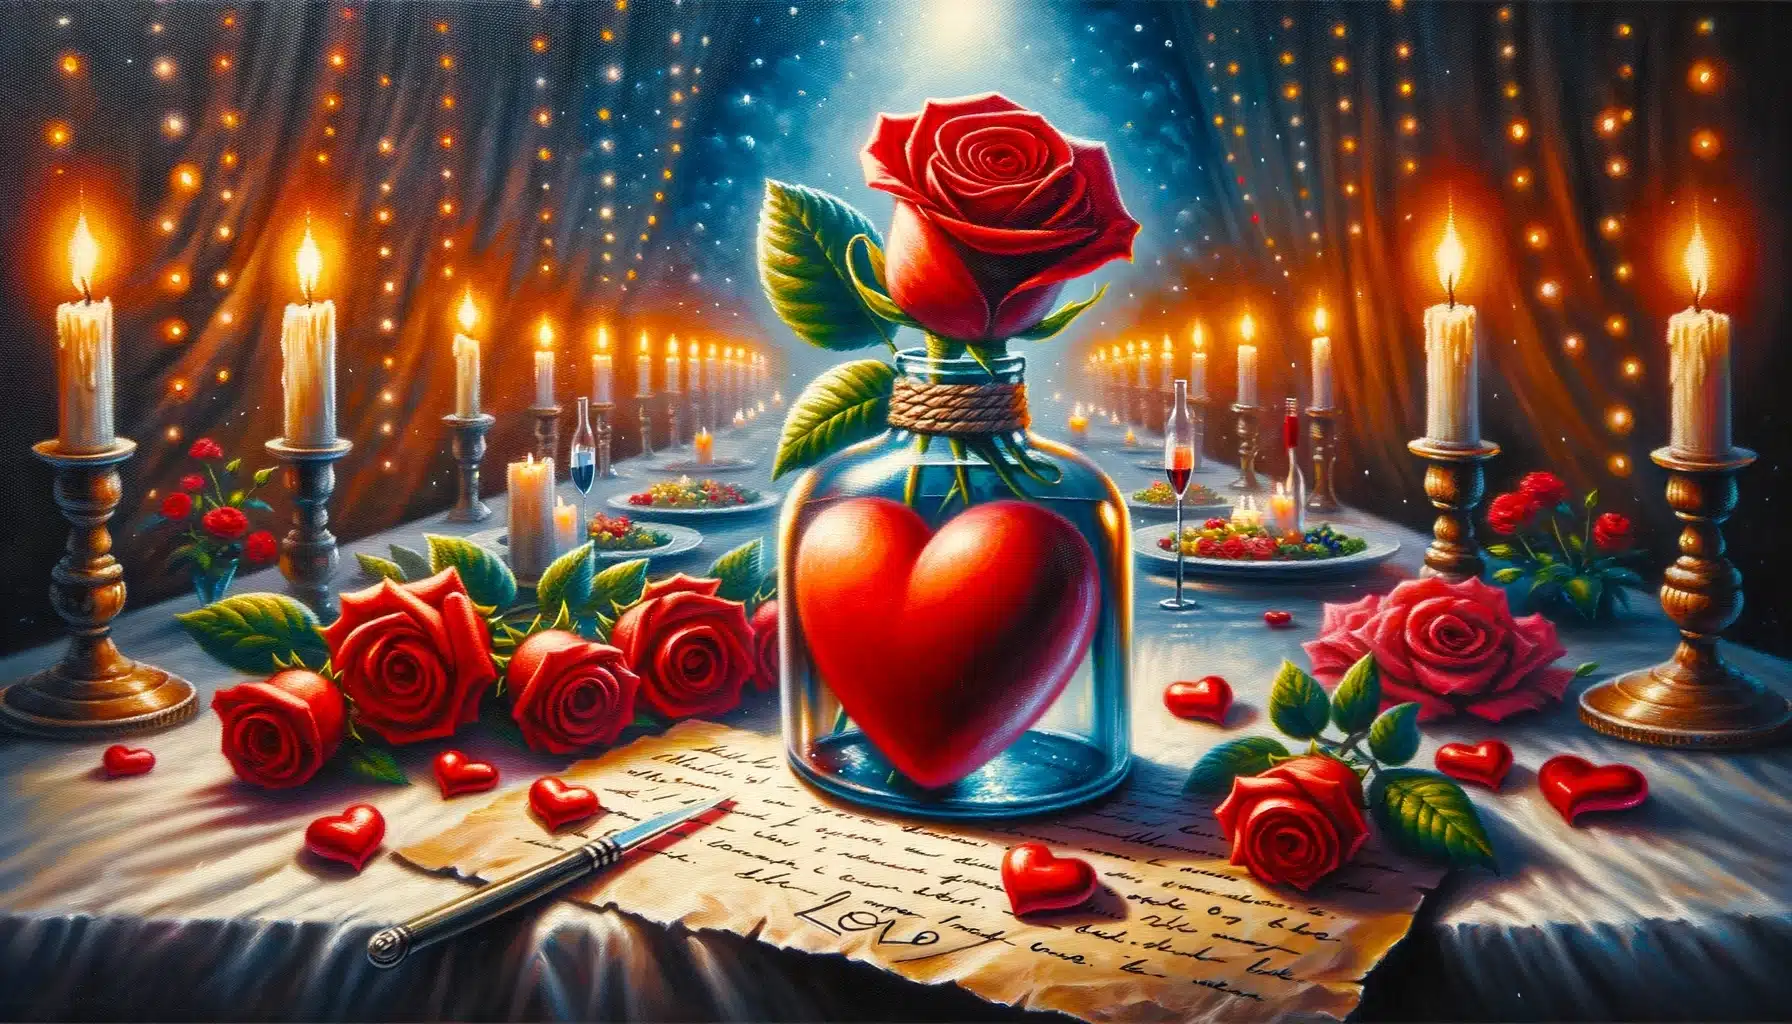 a red heart emoji inside a wine bottle on a romantic table